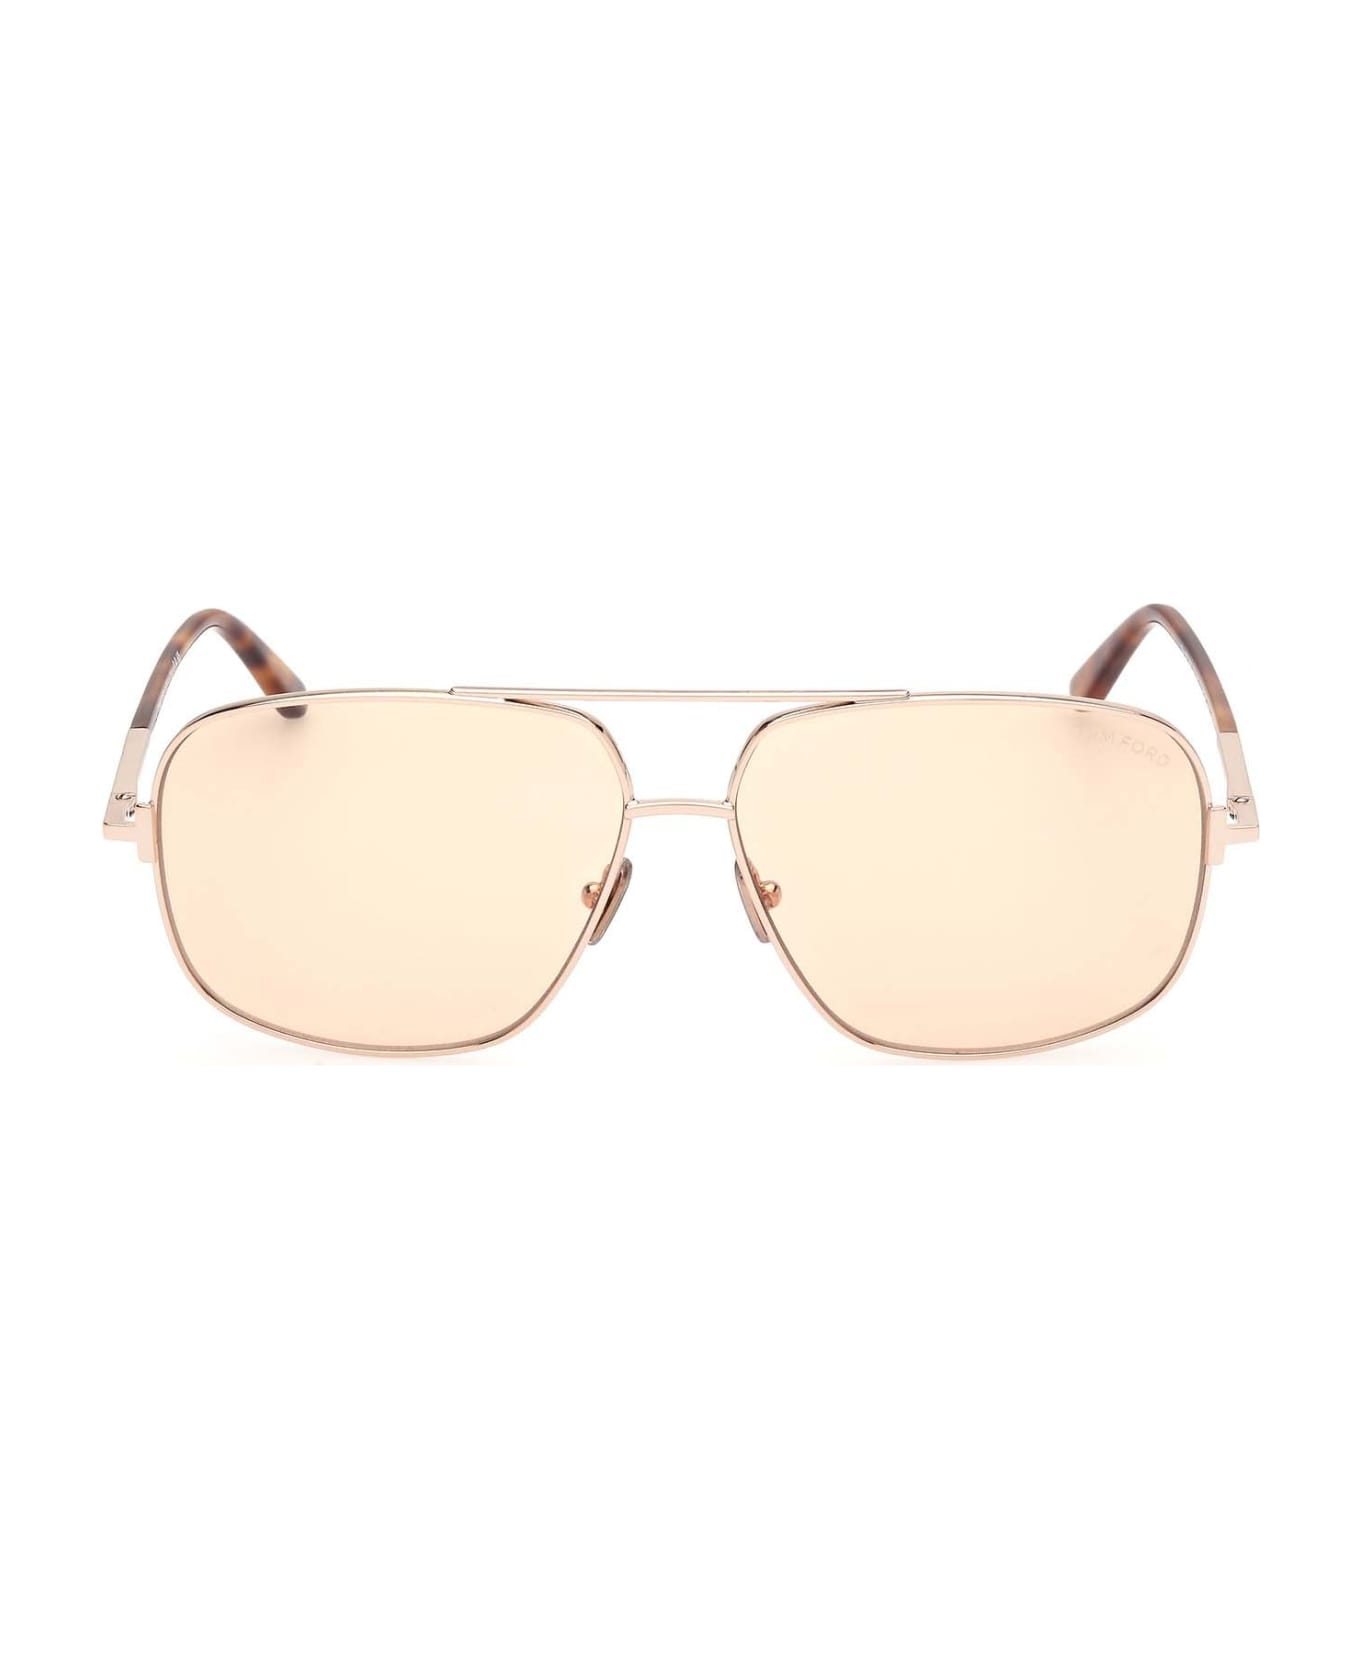 Tom Ford Eyewear Sunglasses - Oro/Marrone サングラス